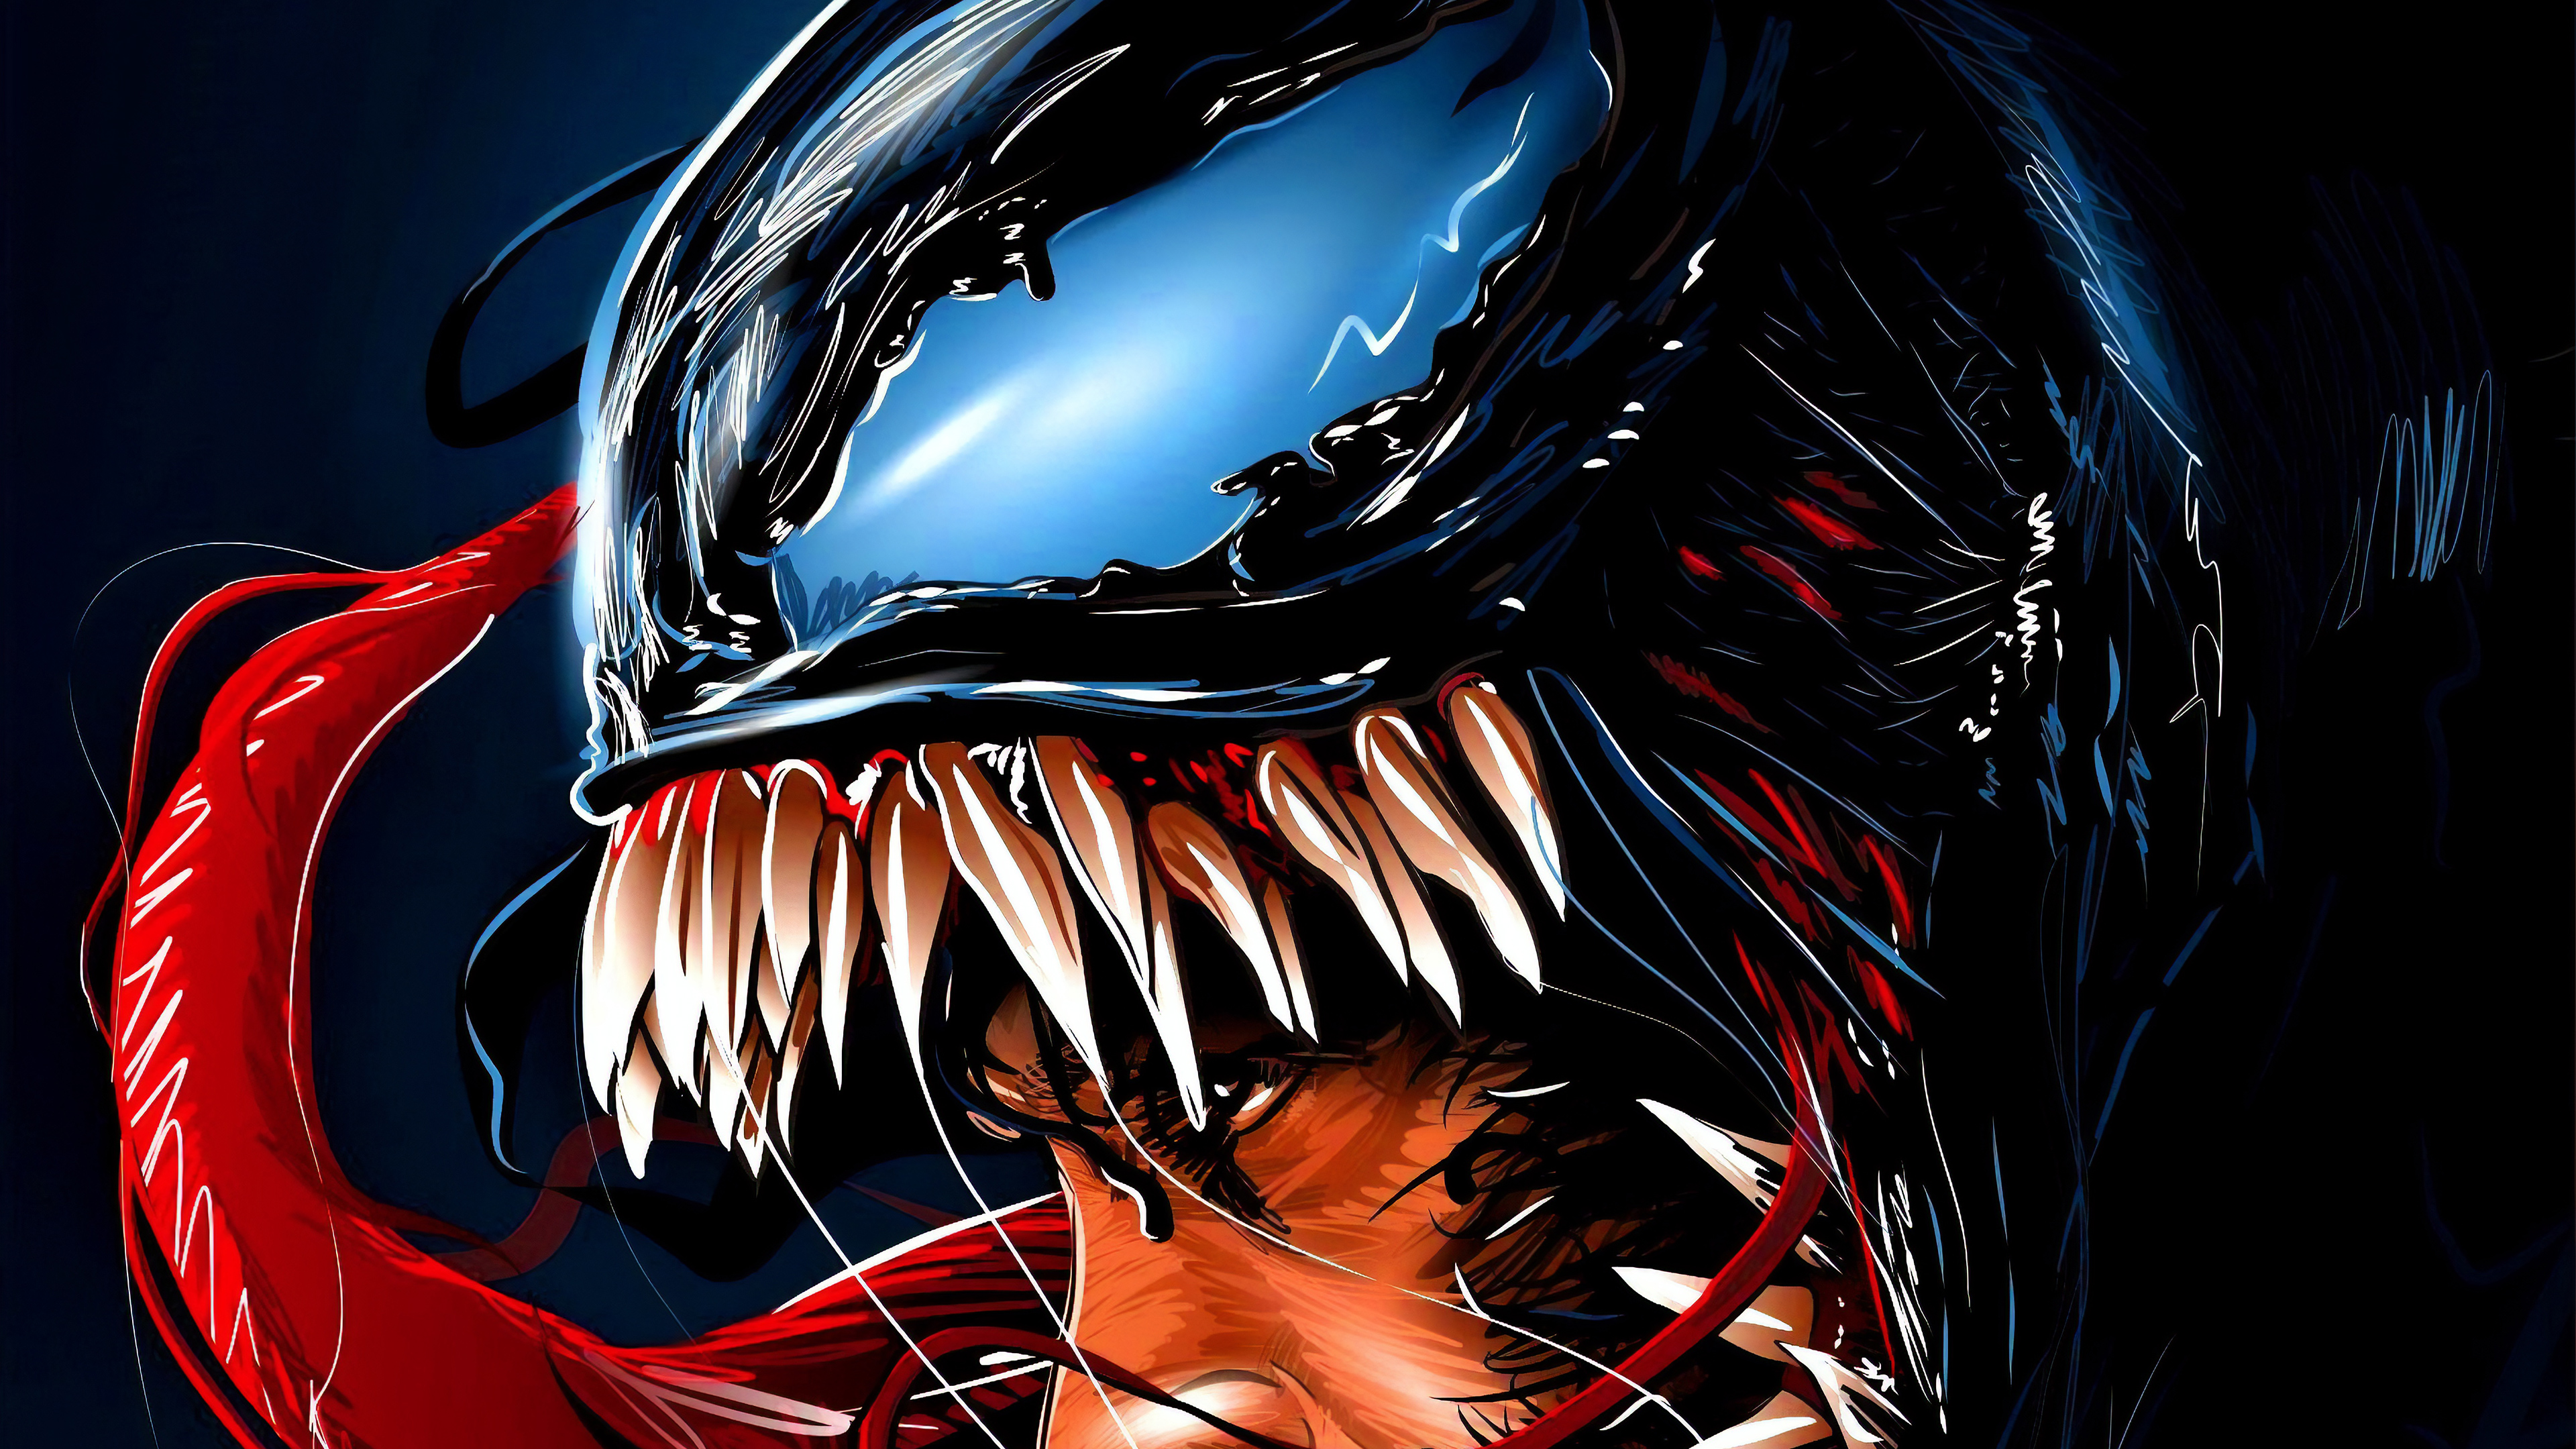 New Venom 2020 Art Wallpapers